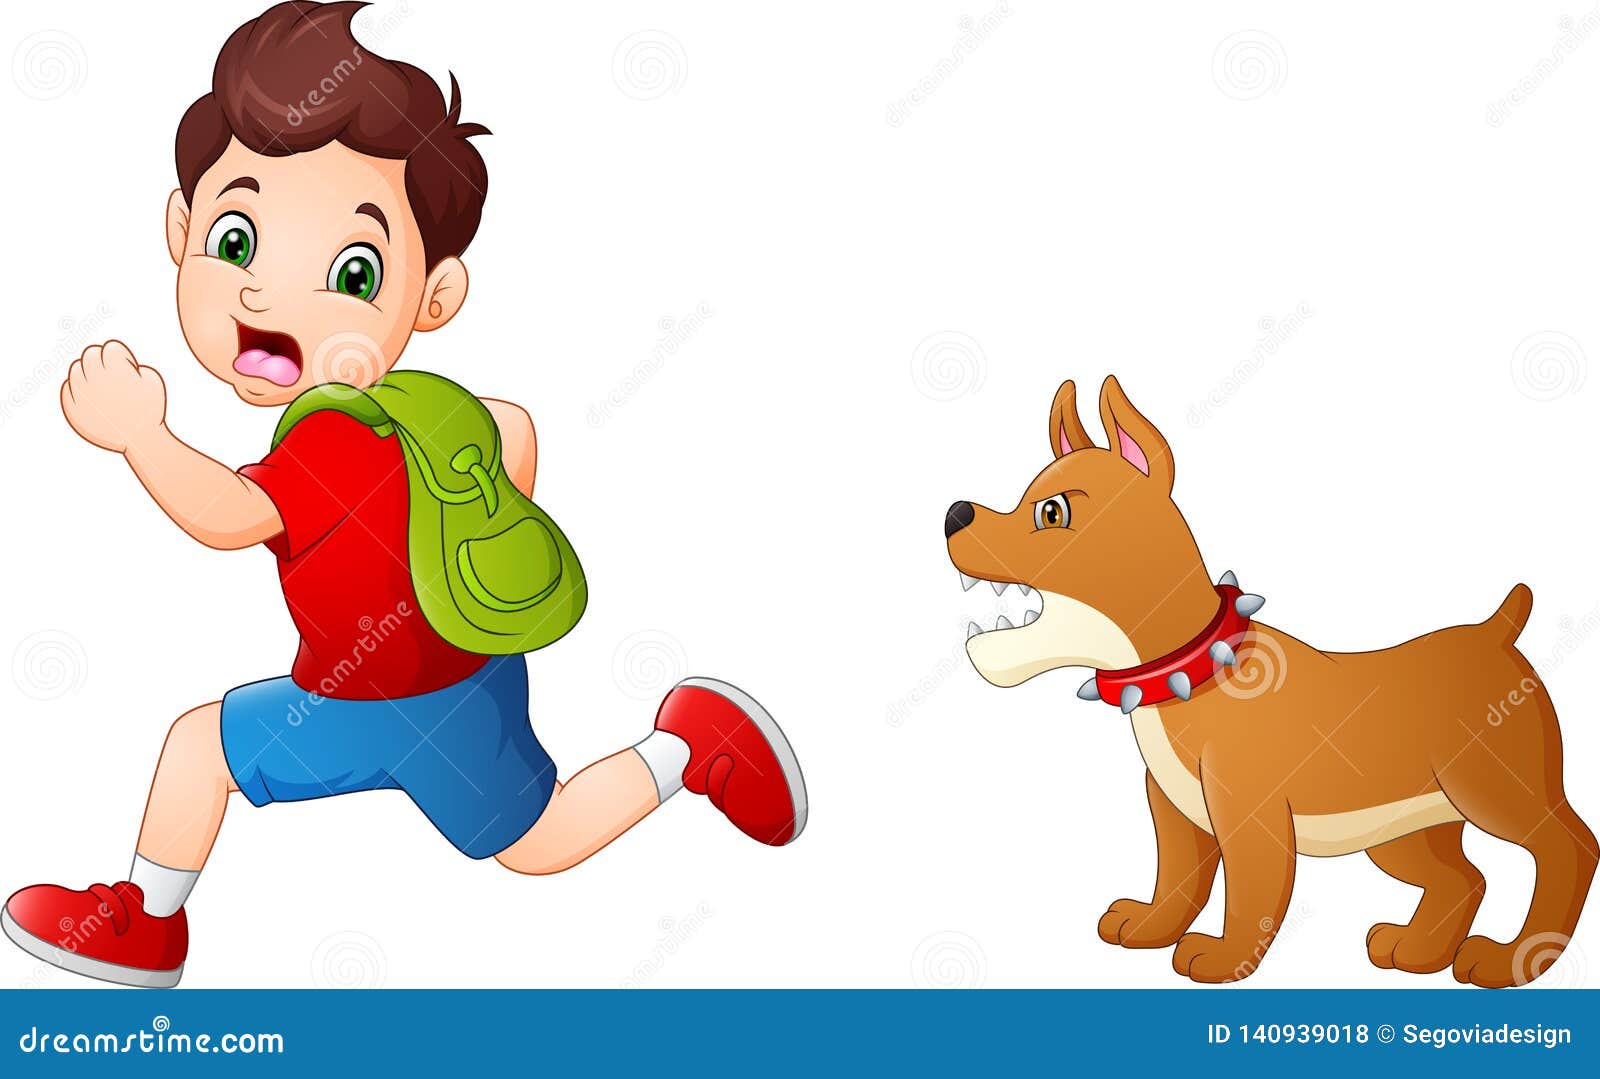 snarling dog clipart for kids